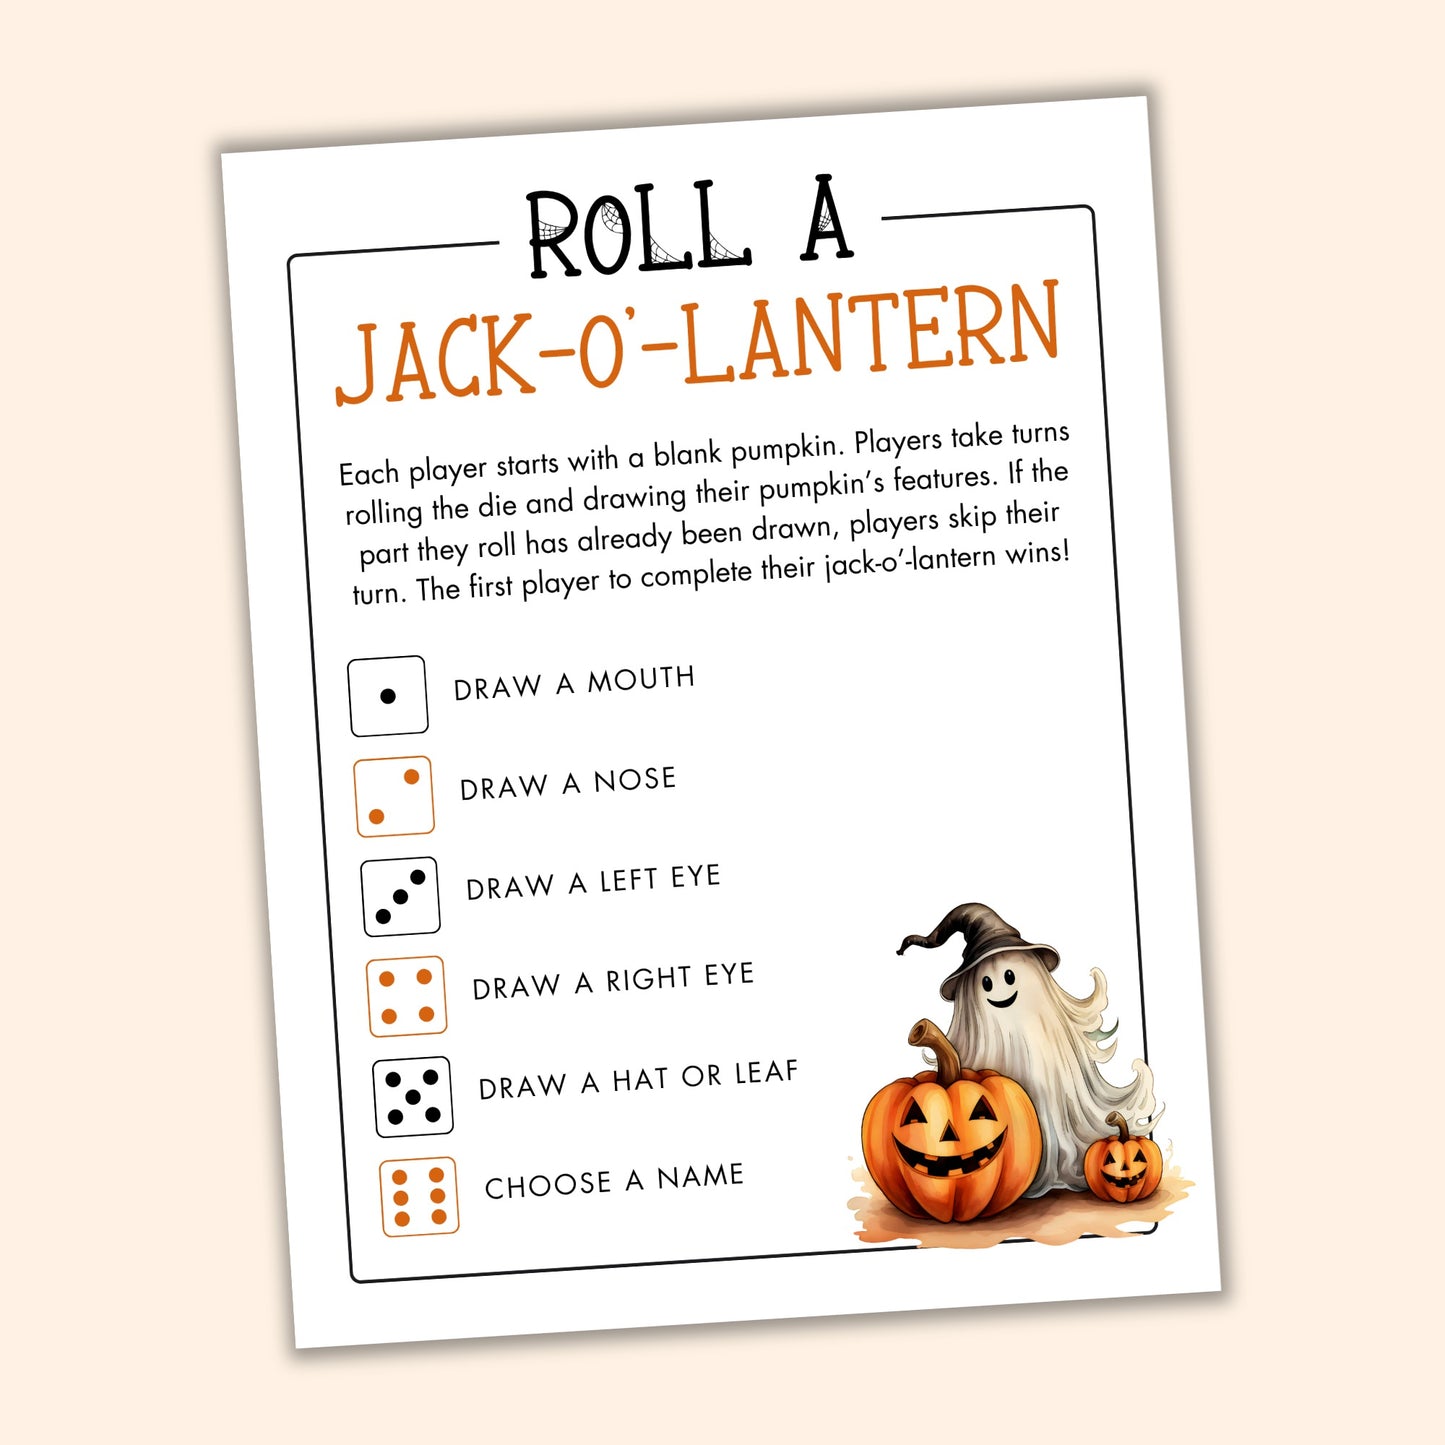 Roll a Jack-o'-Lantern Game